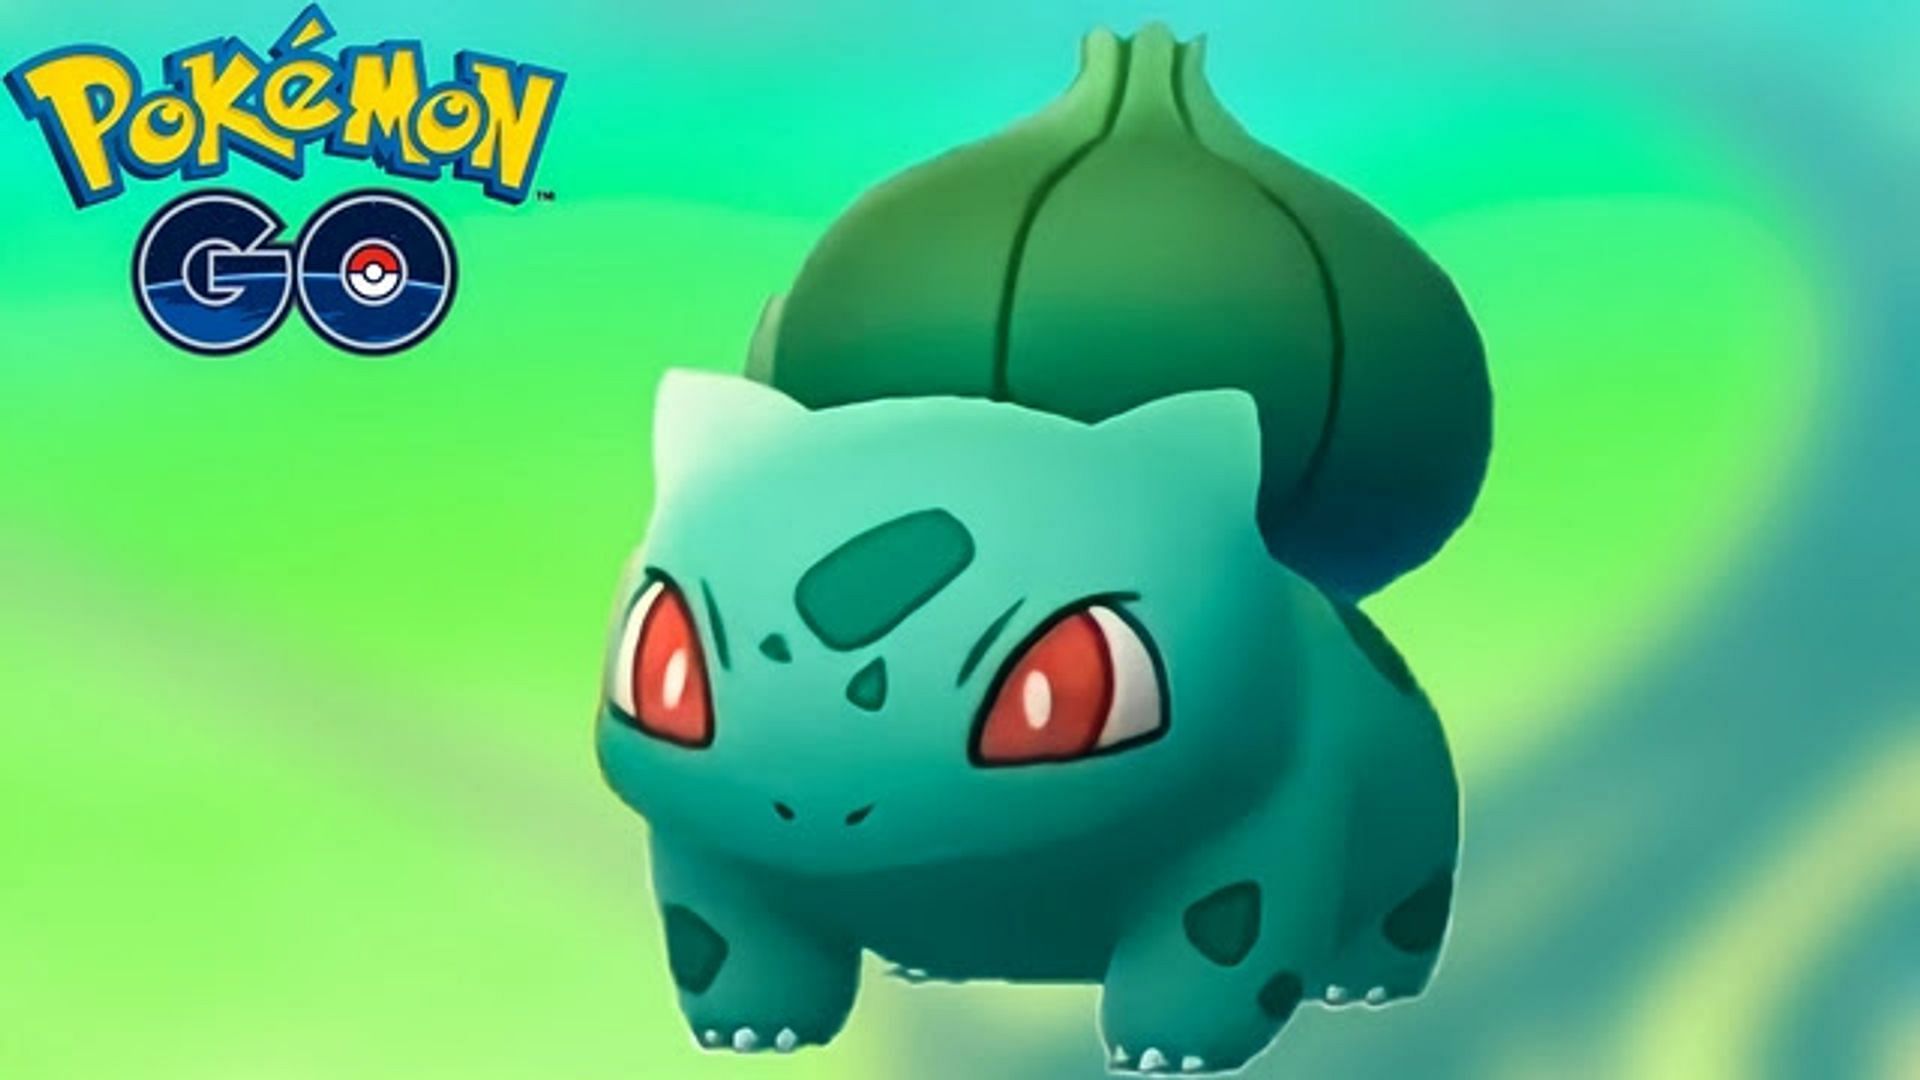 Pokémon Go' Community Day: Shiny Bulbasaur, Start Time and